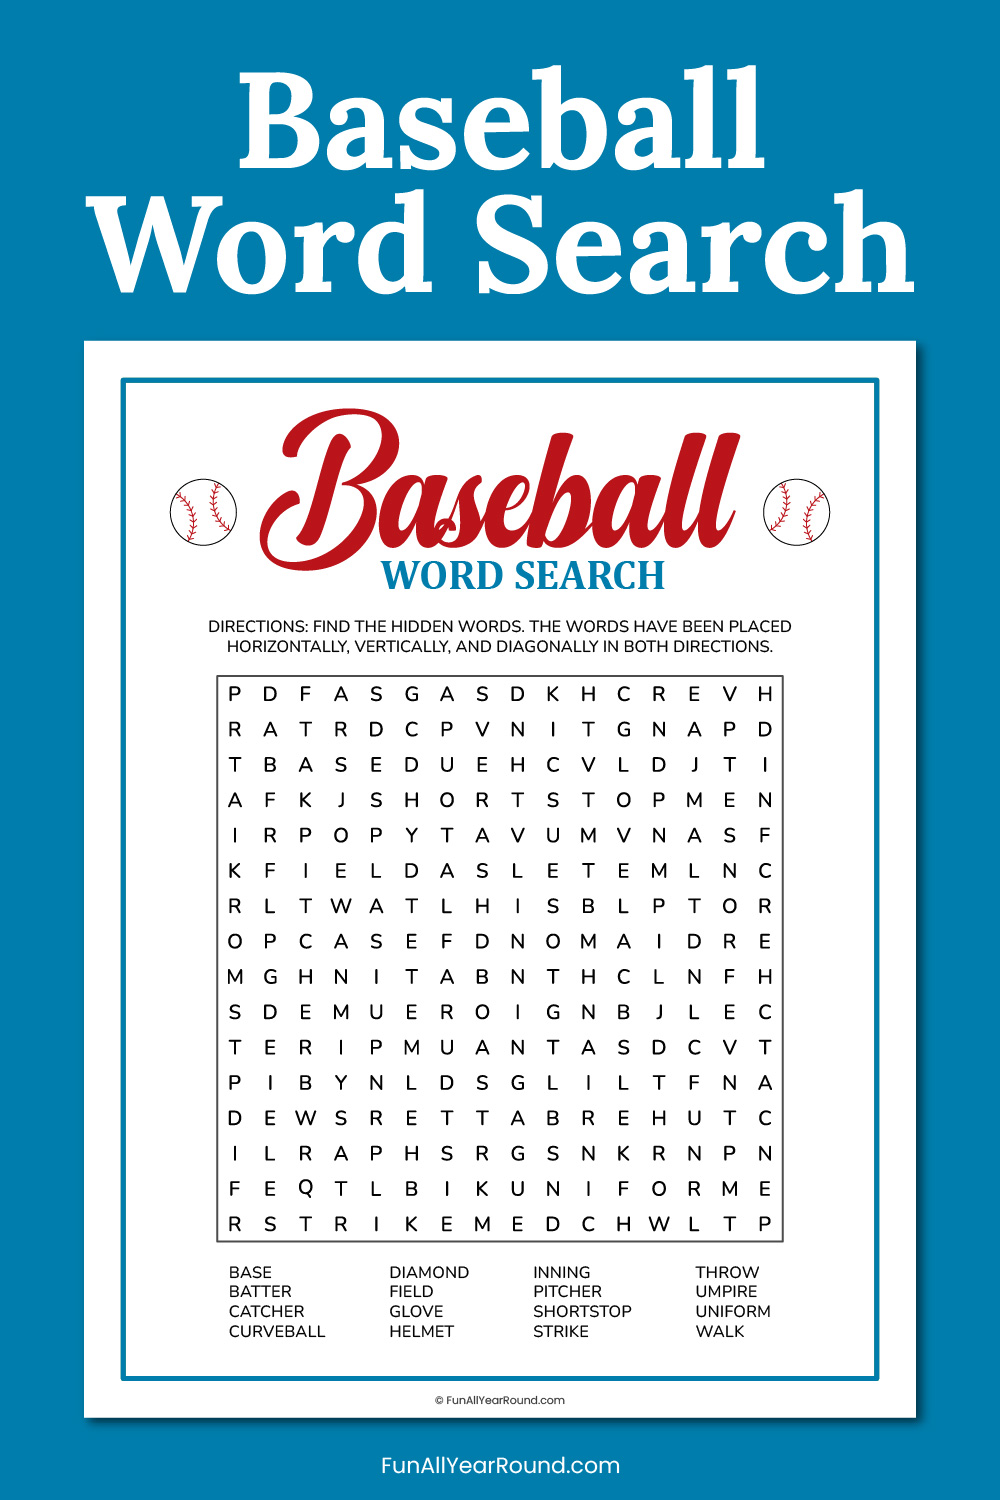 Baseball word search